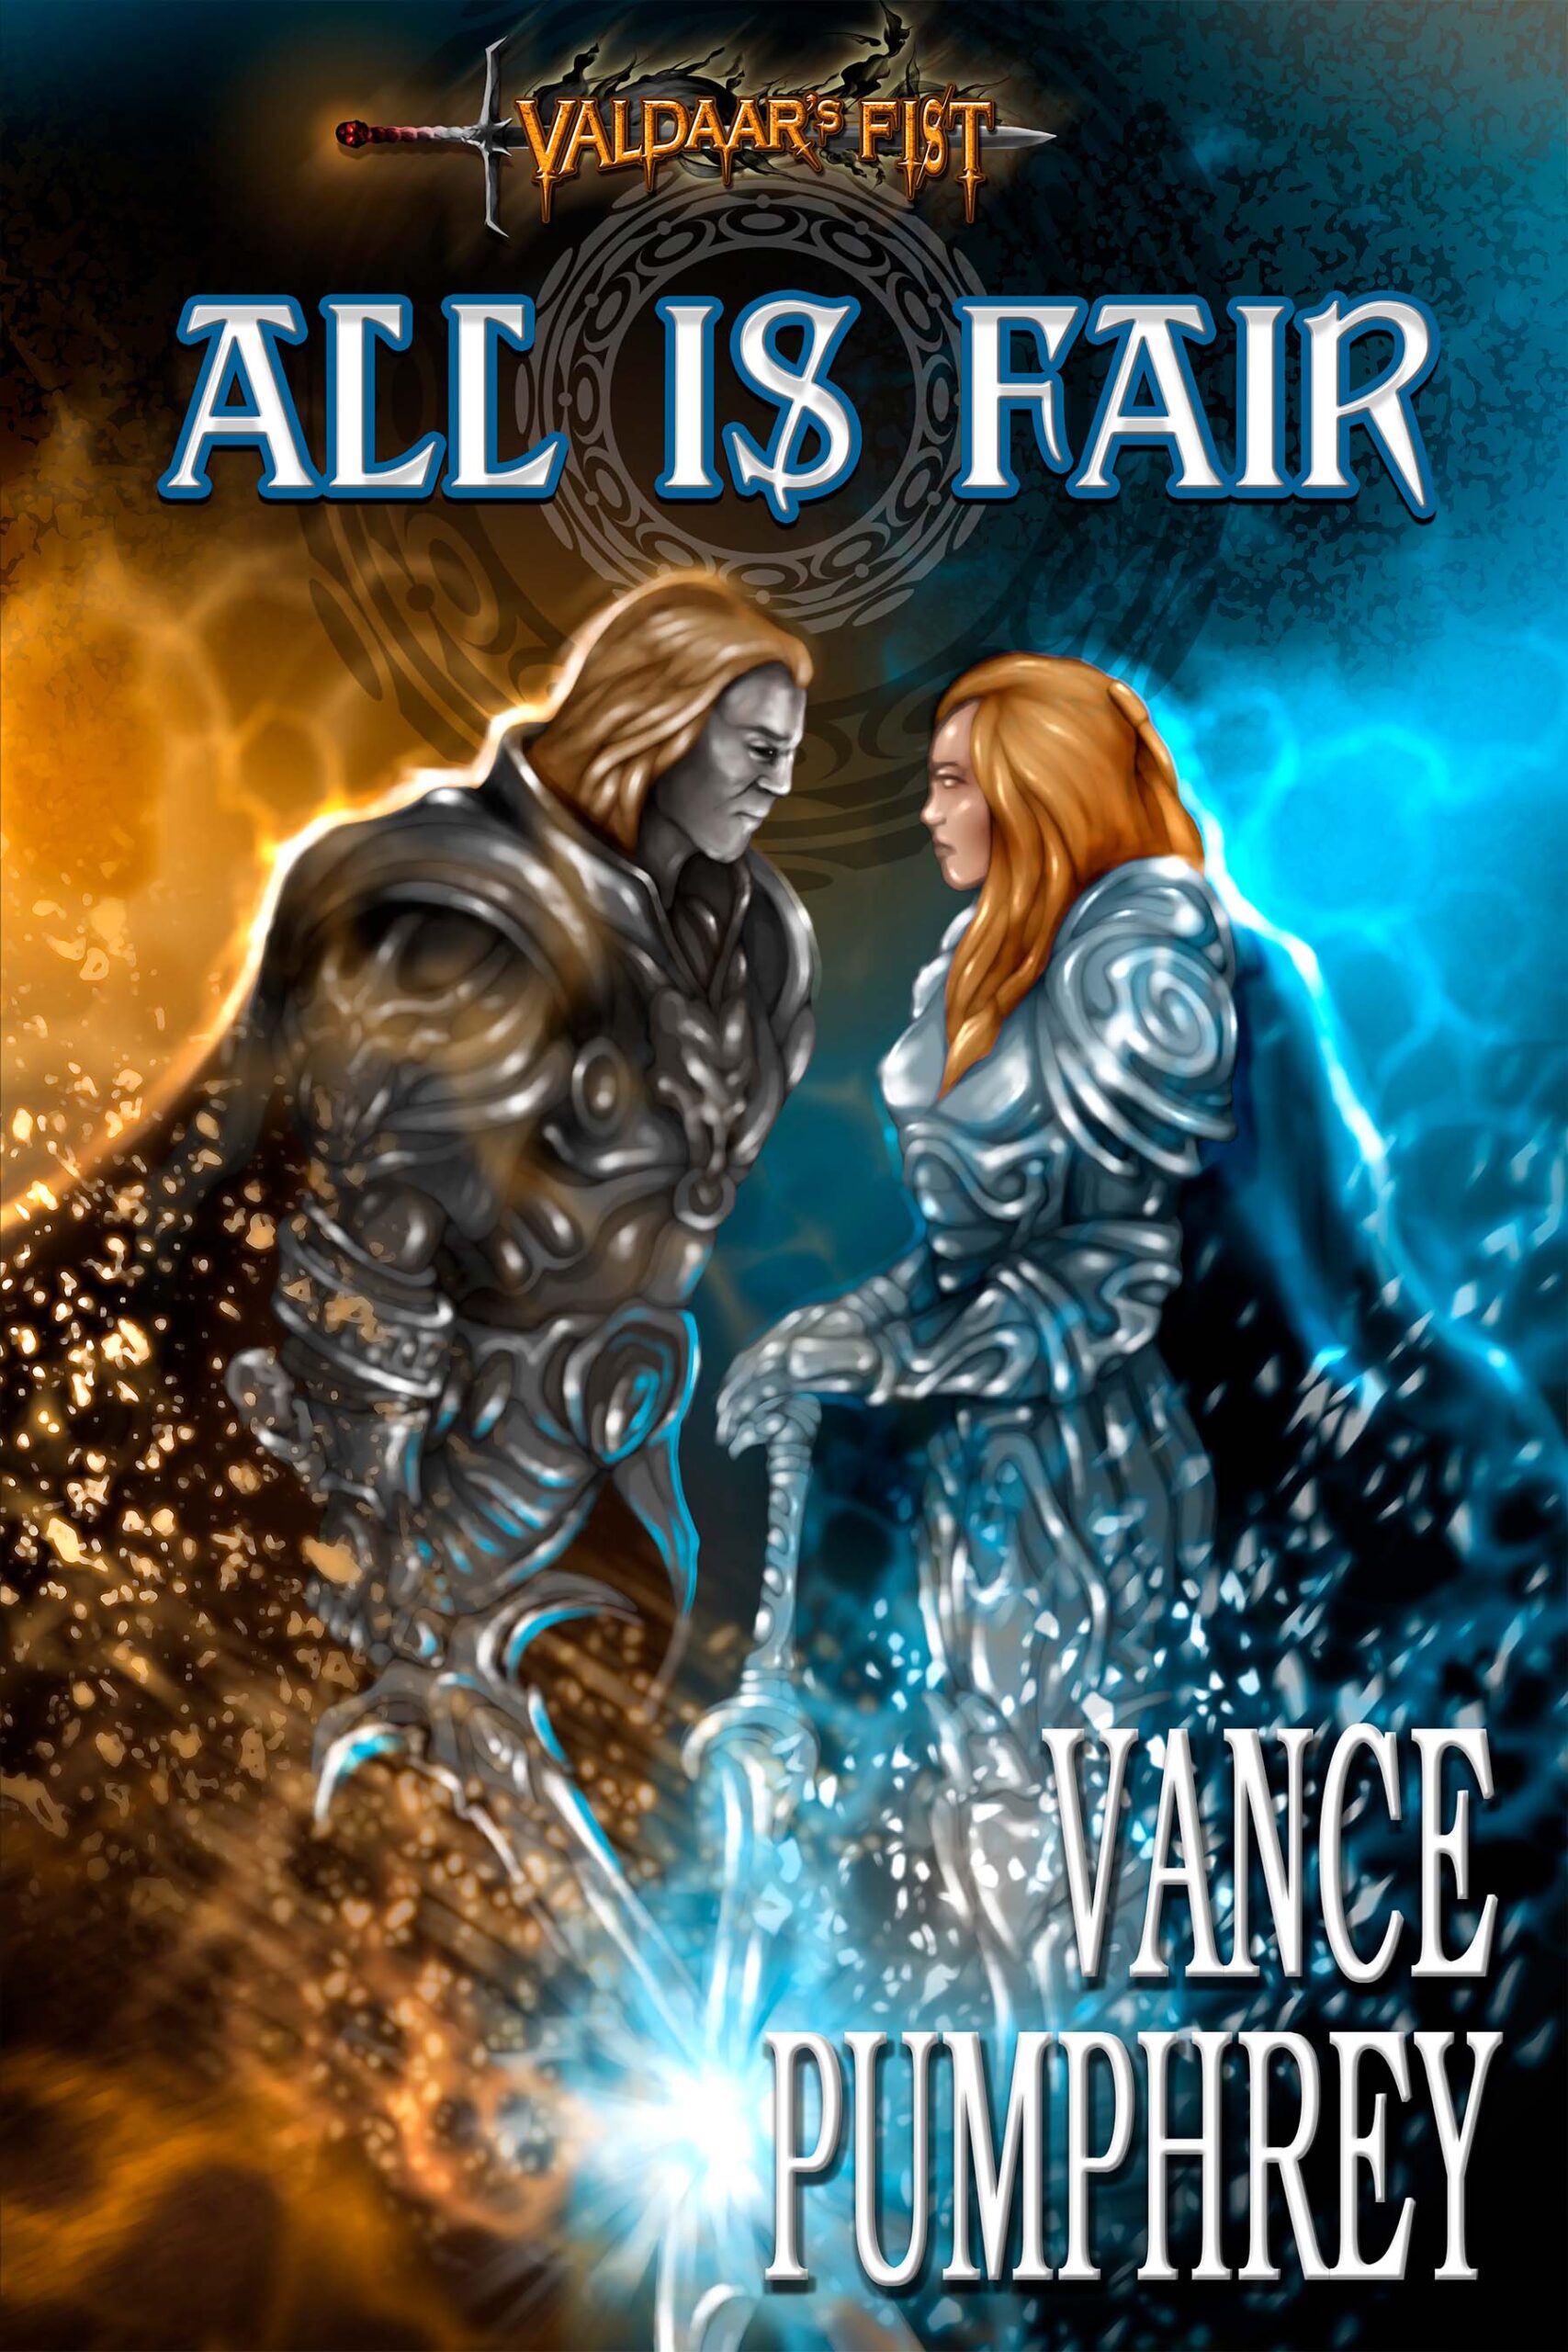 All is Fair: Defense of The Land Book 3 (Valdaar’s Fist Volume 7)